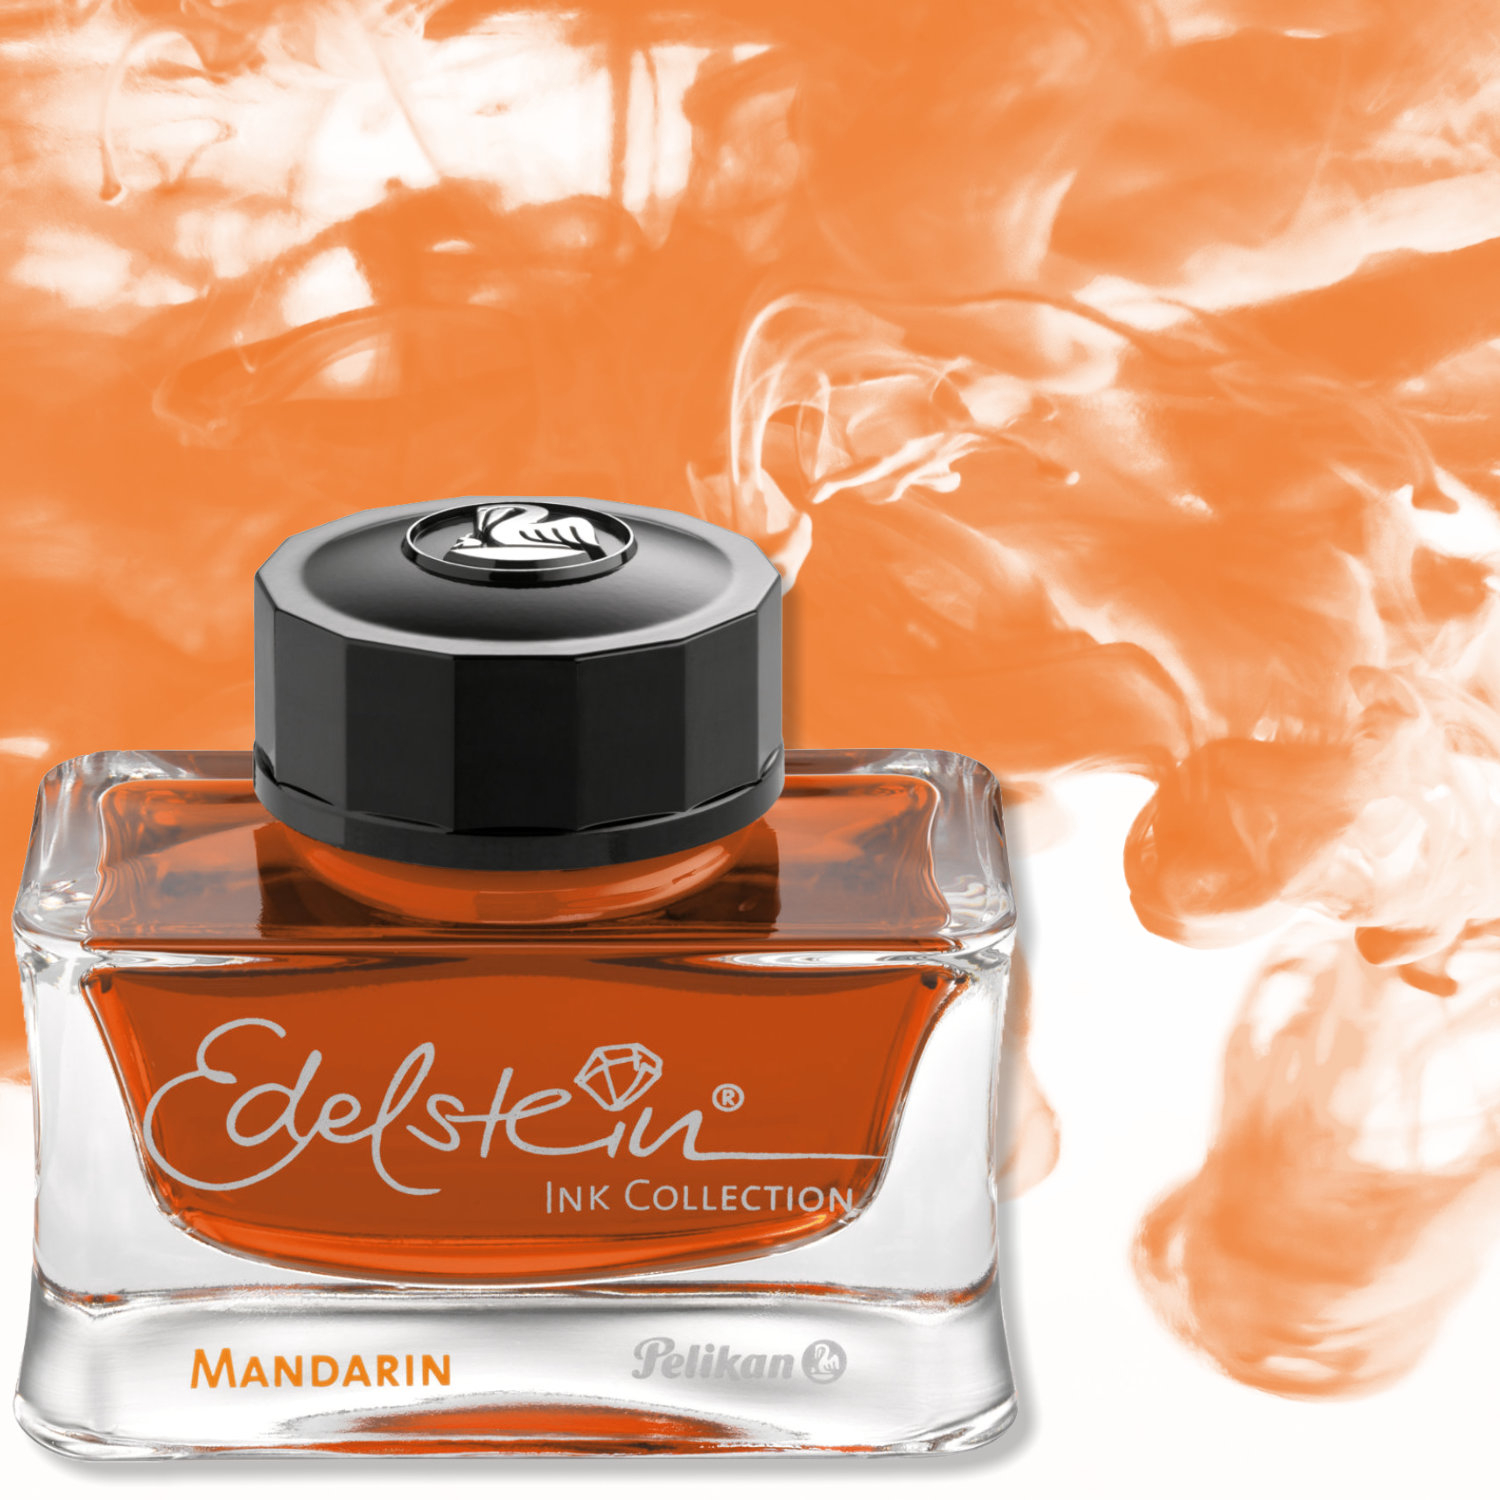 Edelstein Ink Mandarin